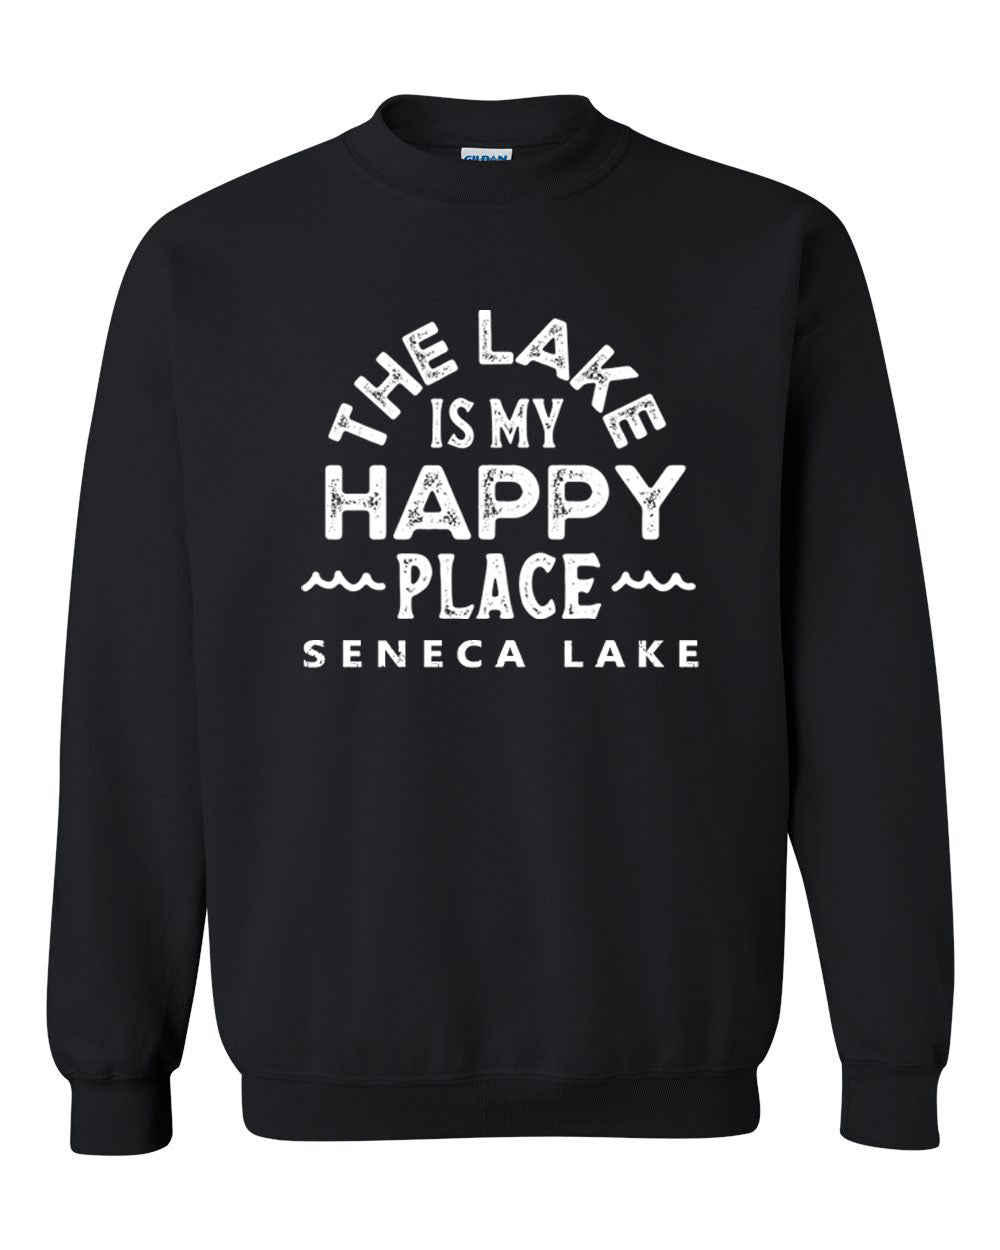 Seneca Lake Design 4 non hooded sweatshirt